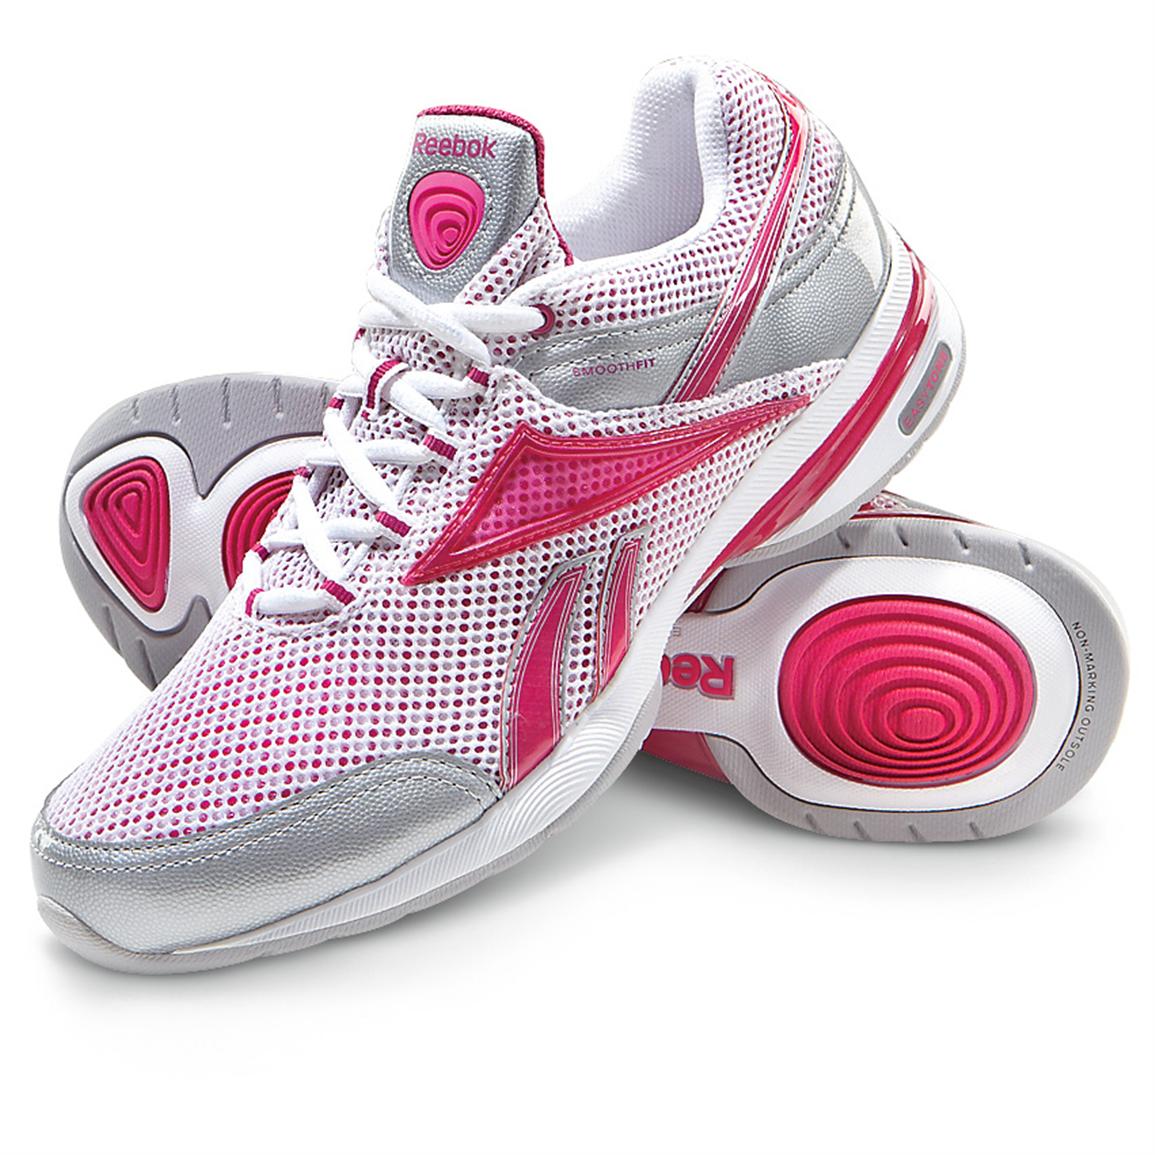 Women's Reebok® EasyTone Reenew Shoes, White / Fushia 420982, Running Shoes & at Sportsman's Guide